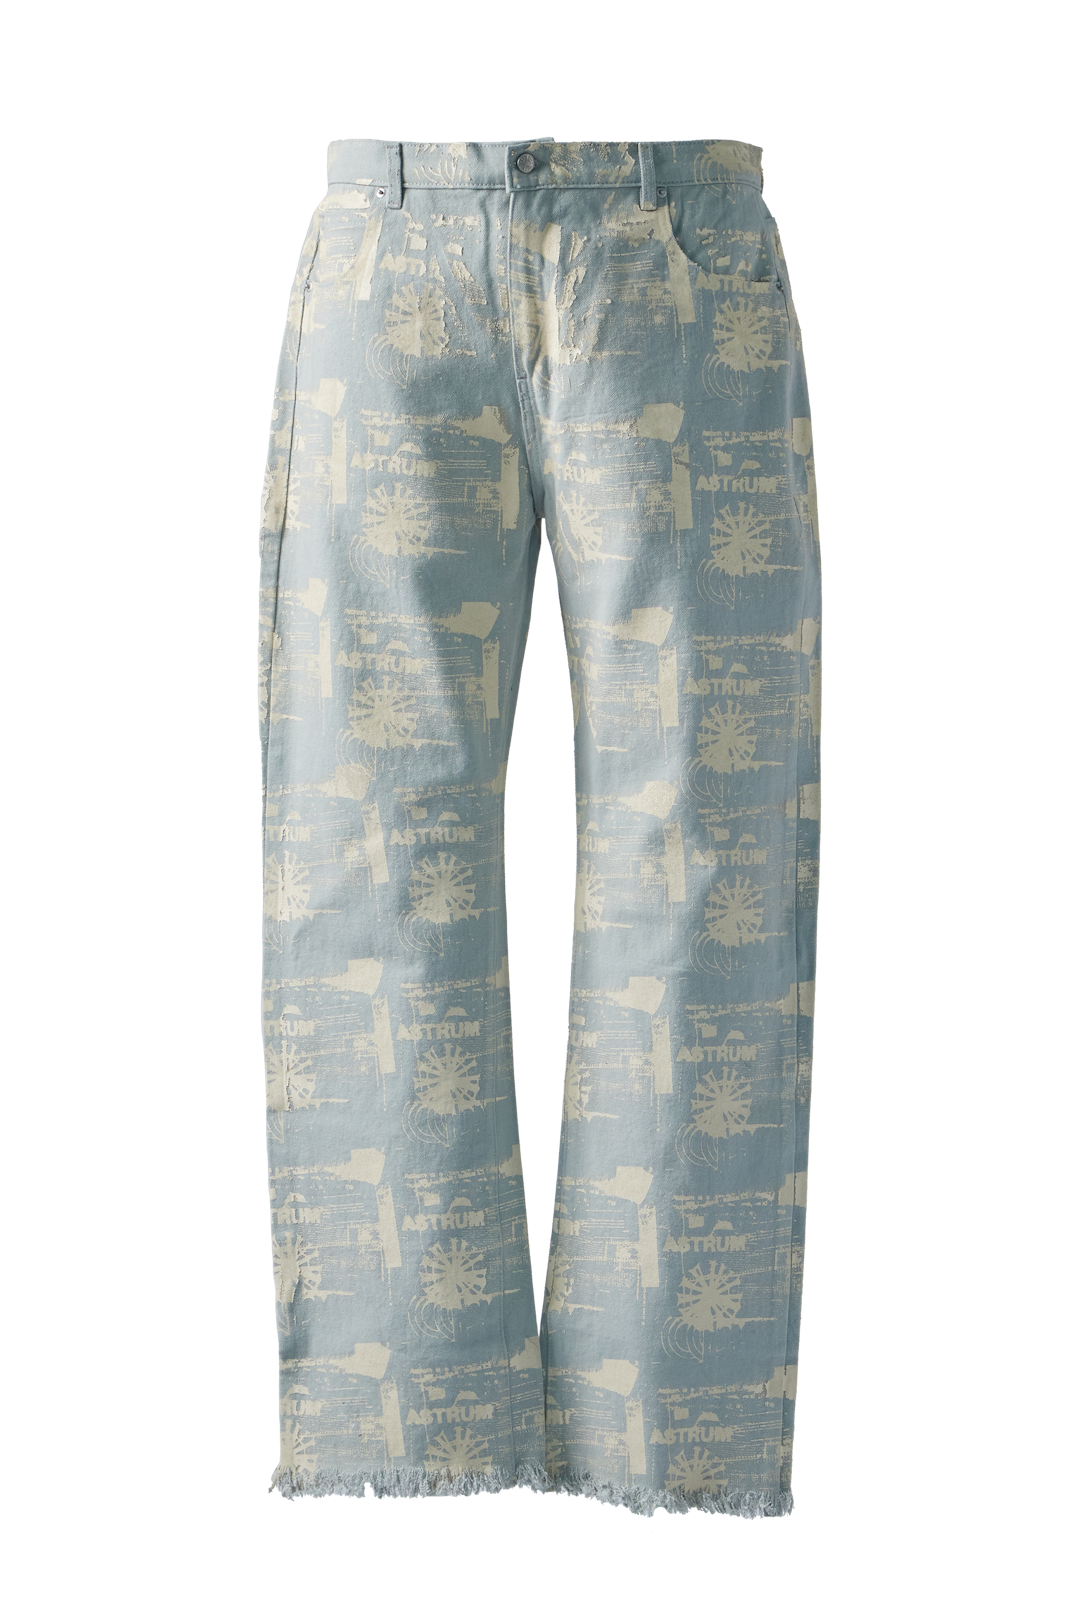 ASTRUM - Spiral Print Denim Jeans product image